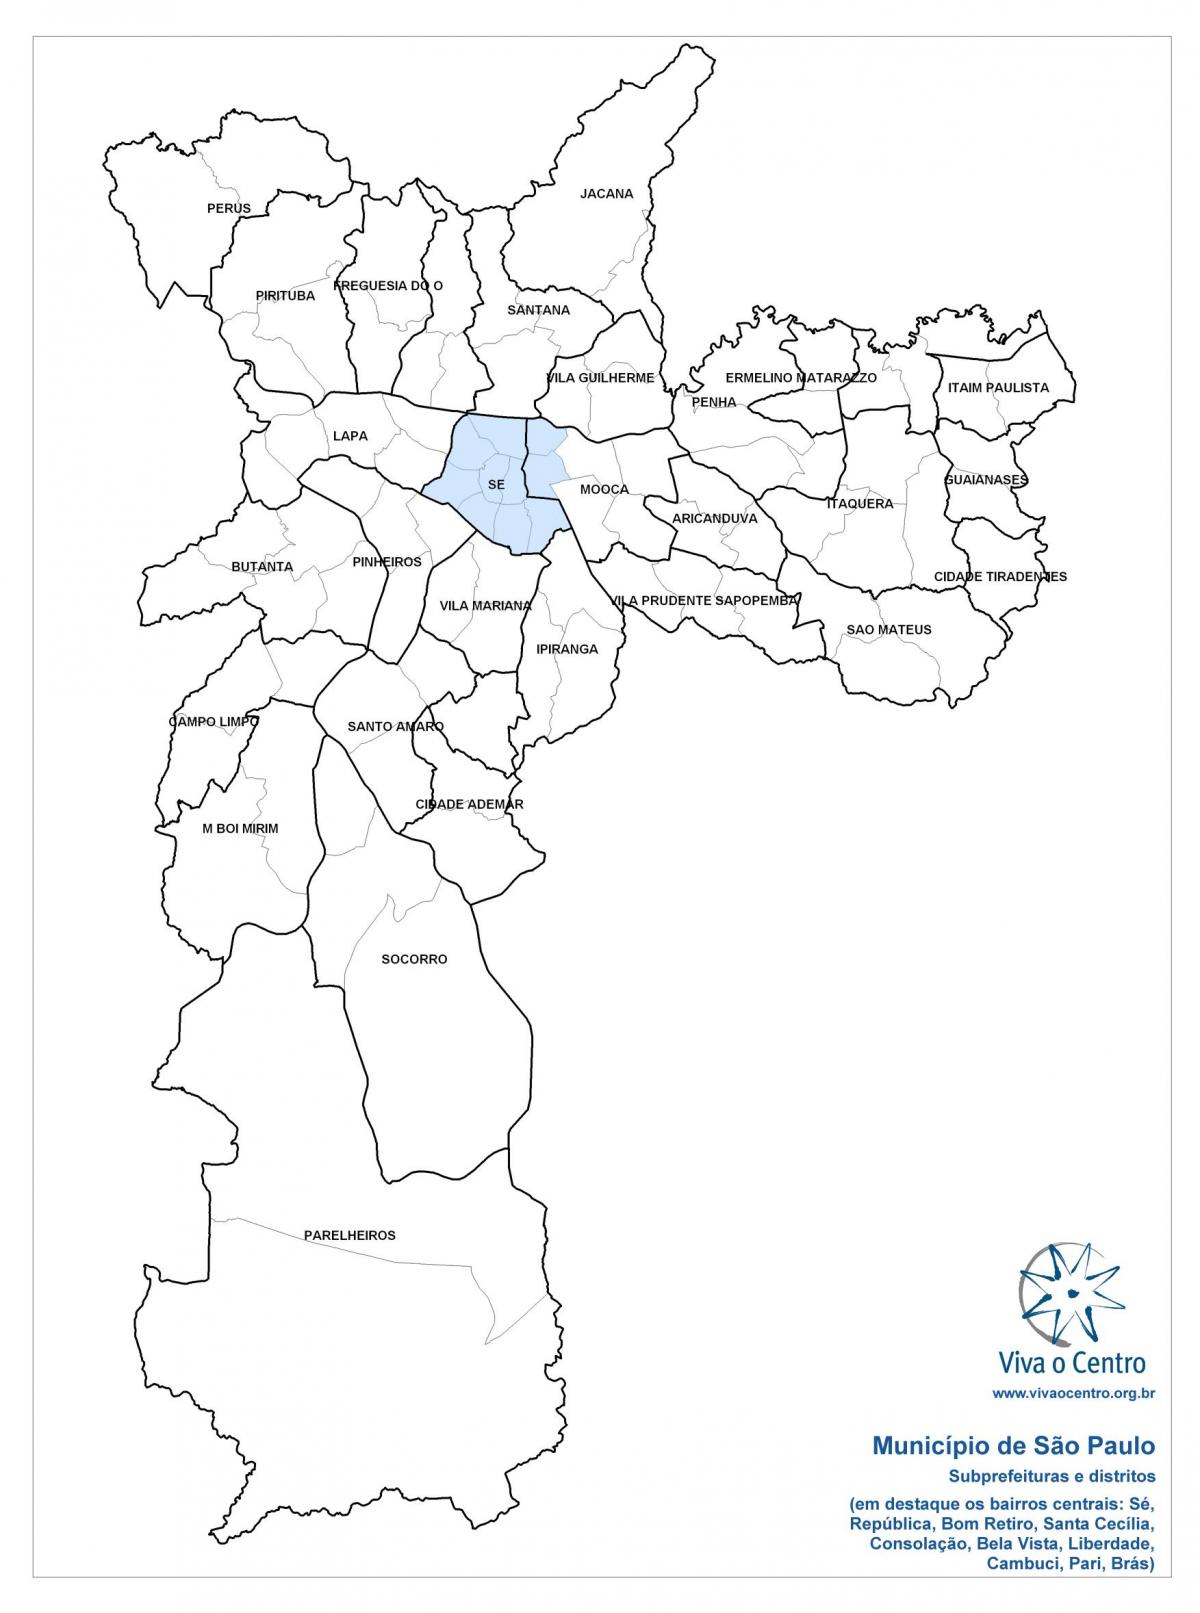 Kort over det Centrale zone São Paulo